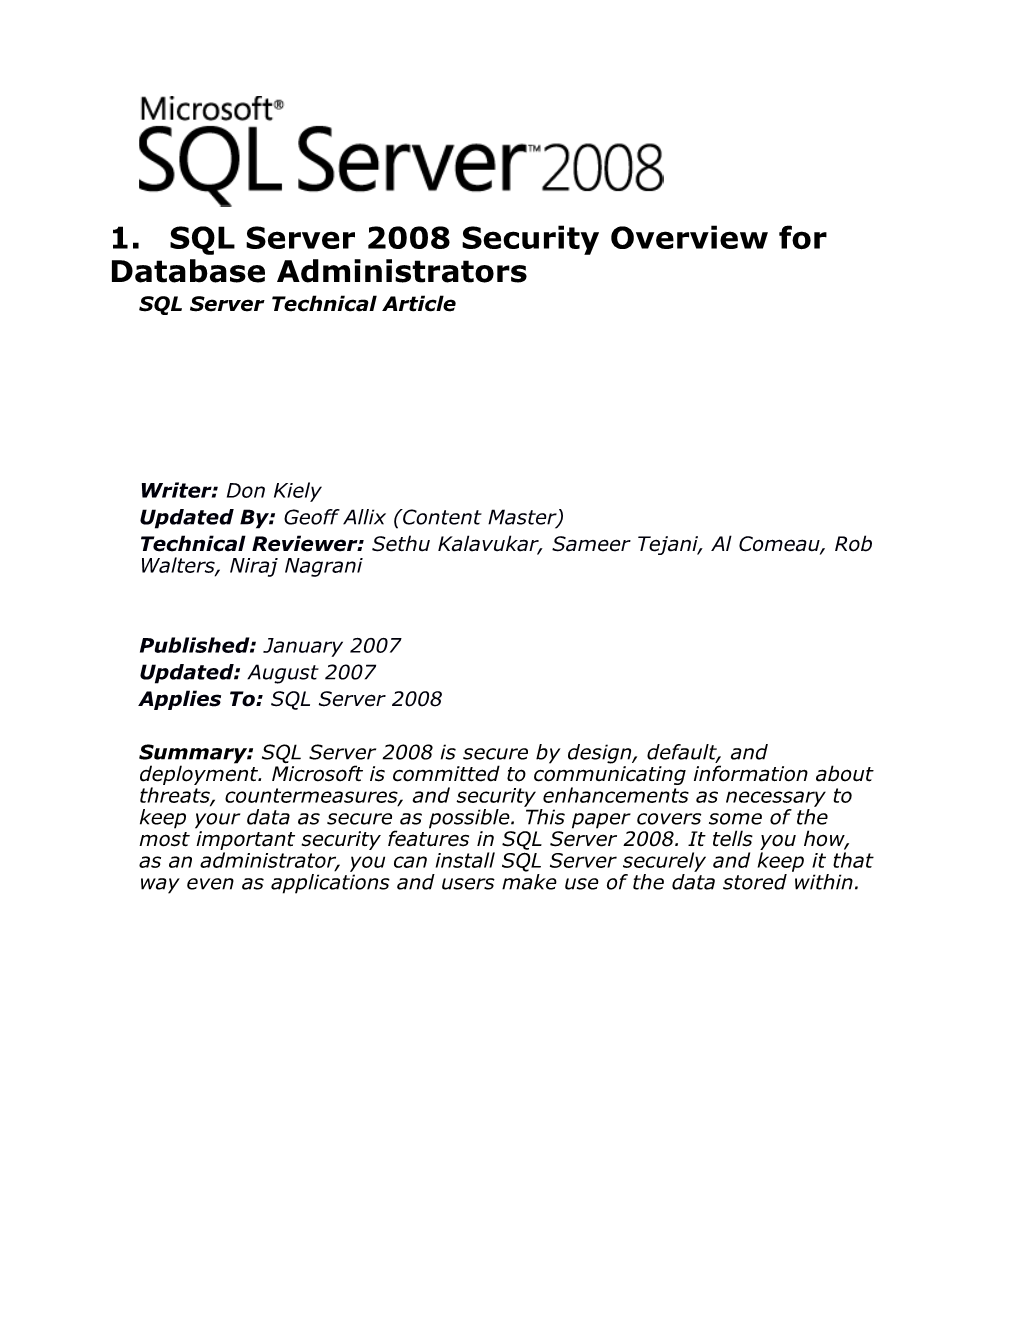 SQL Server 2008 Securityoverview for Database Administrators